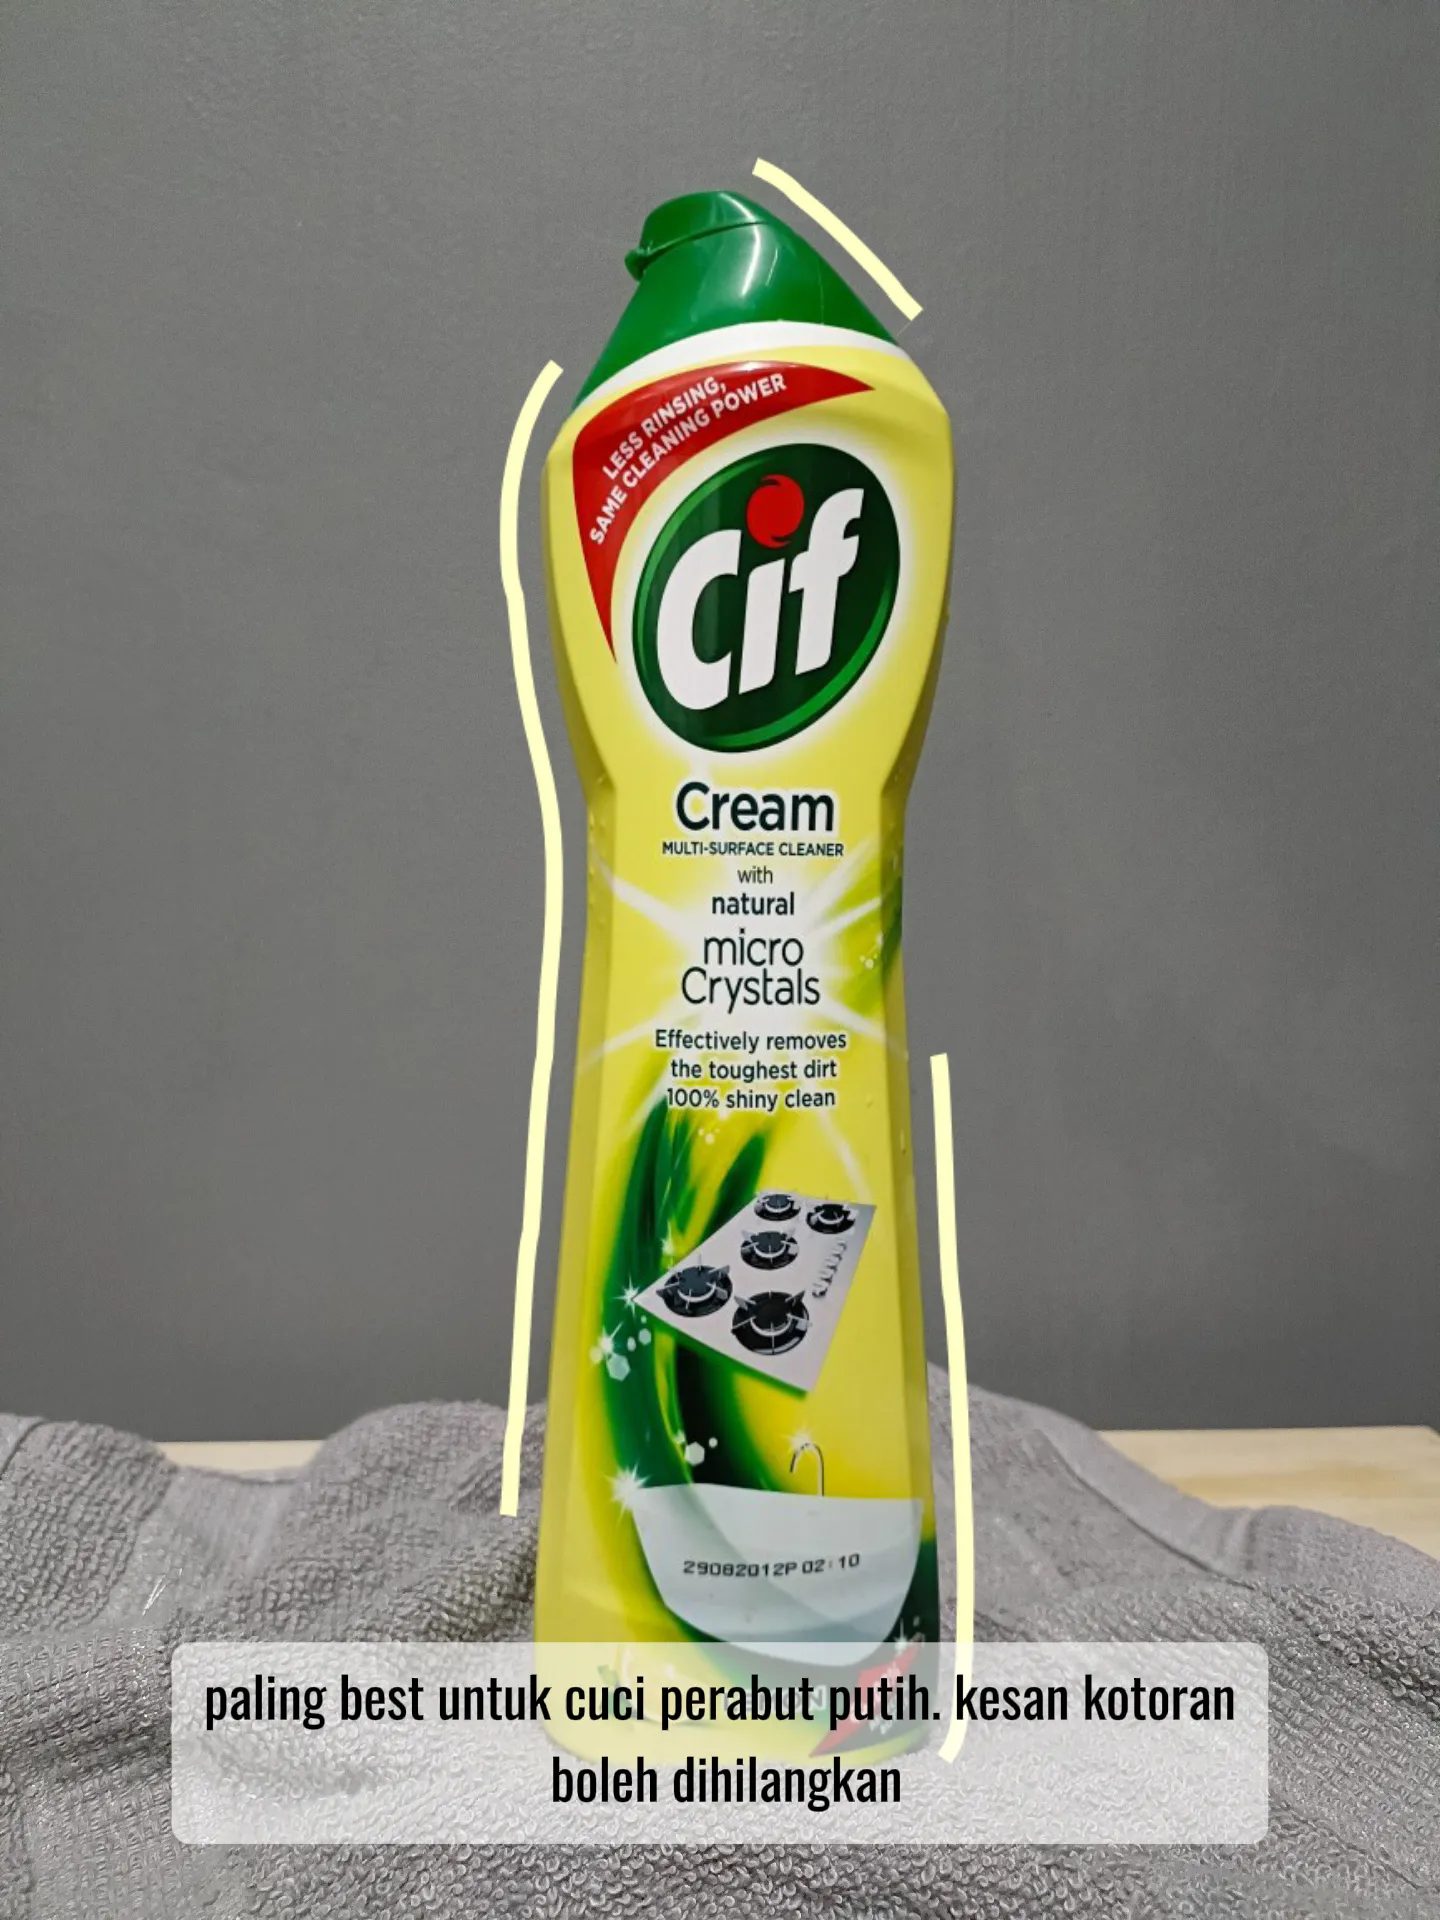 Hob clean using Cif Cream Cleaner & Scrub Mommy 